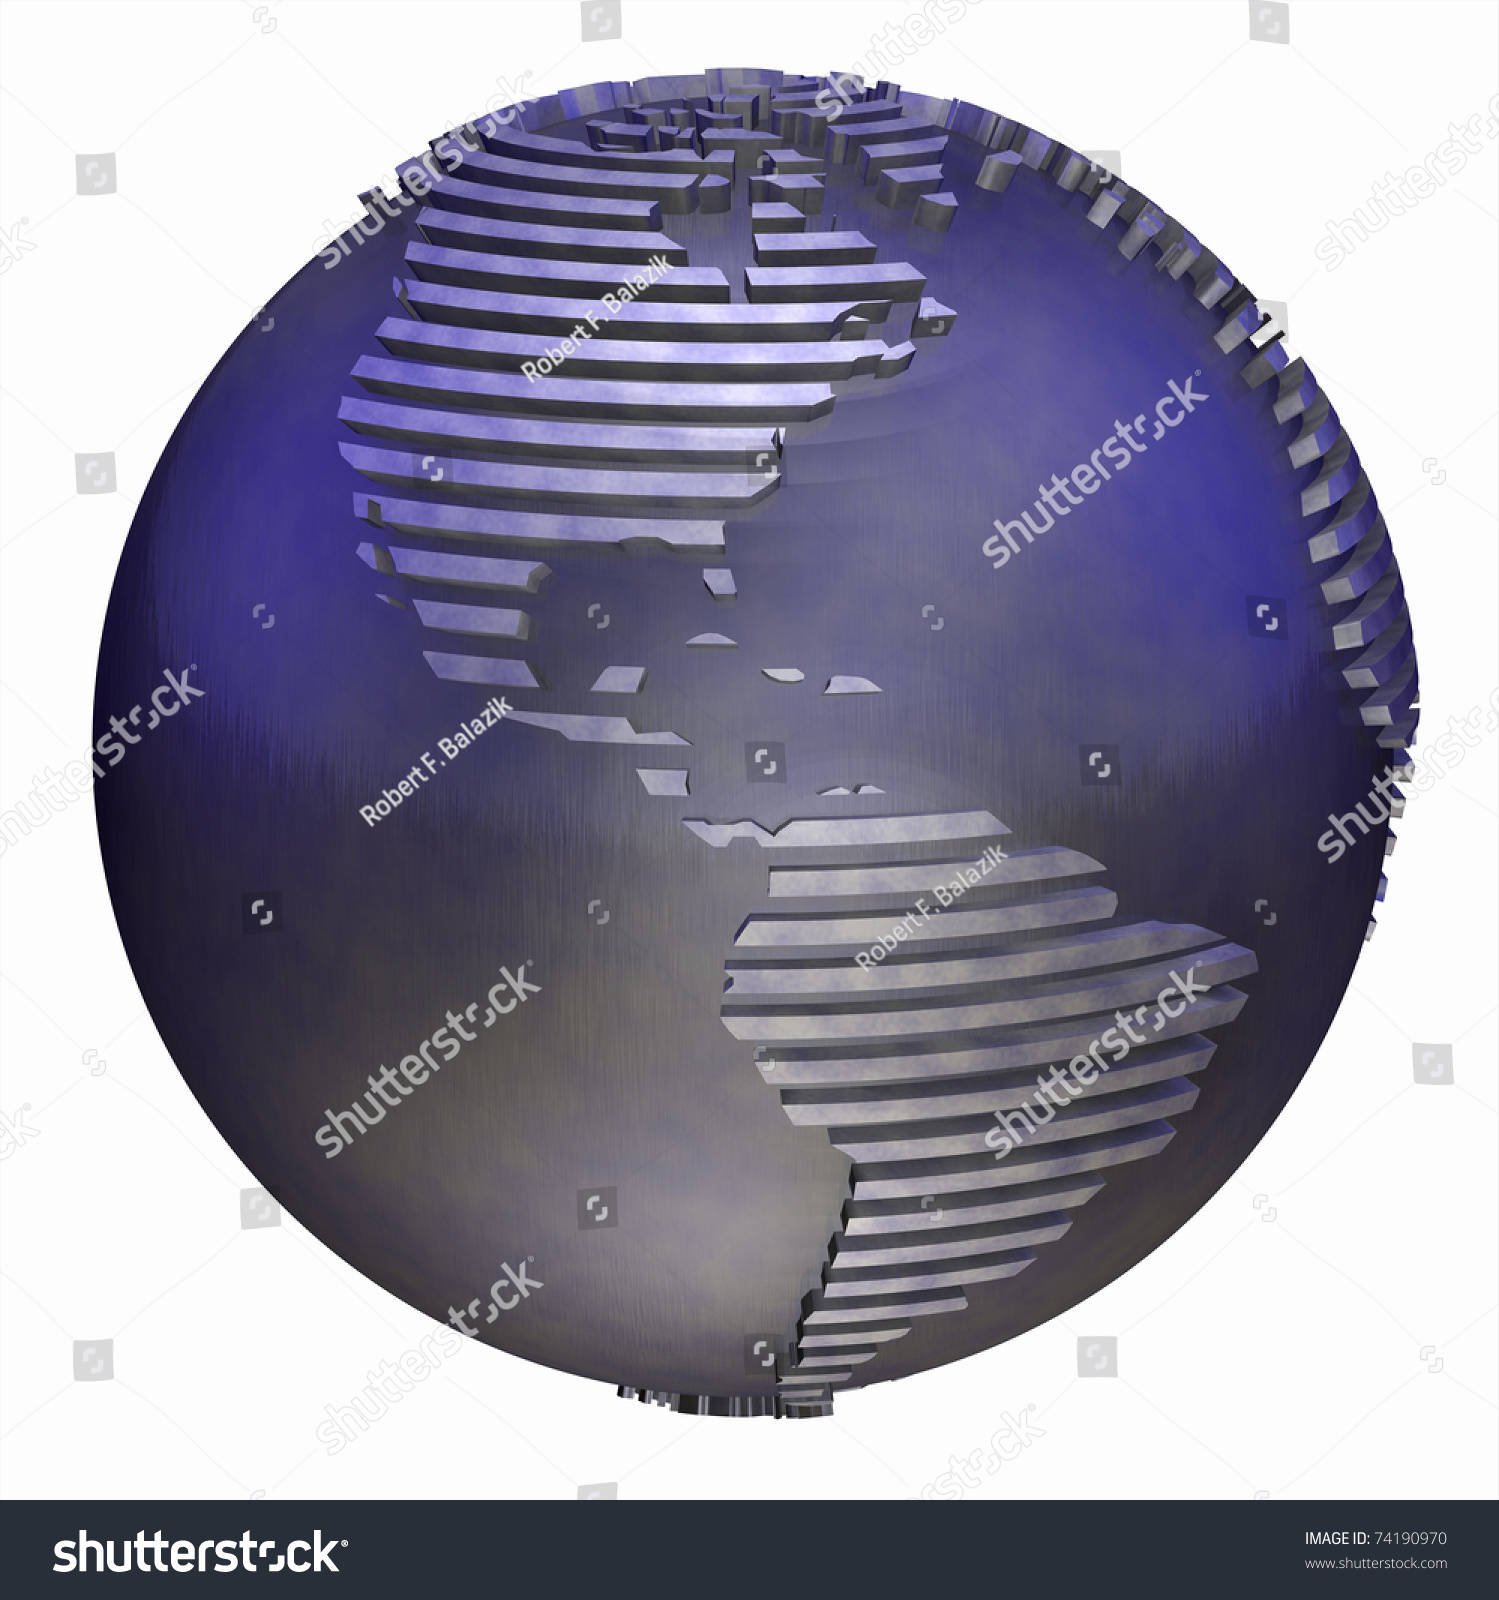 3d Illustration Depicting Stylized Metallic Globe Stock Illustration ...